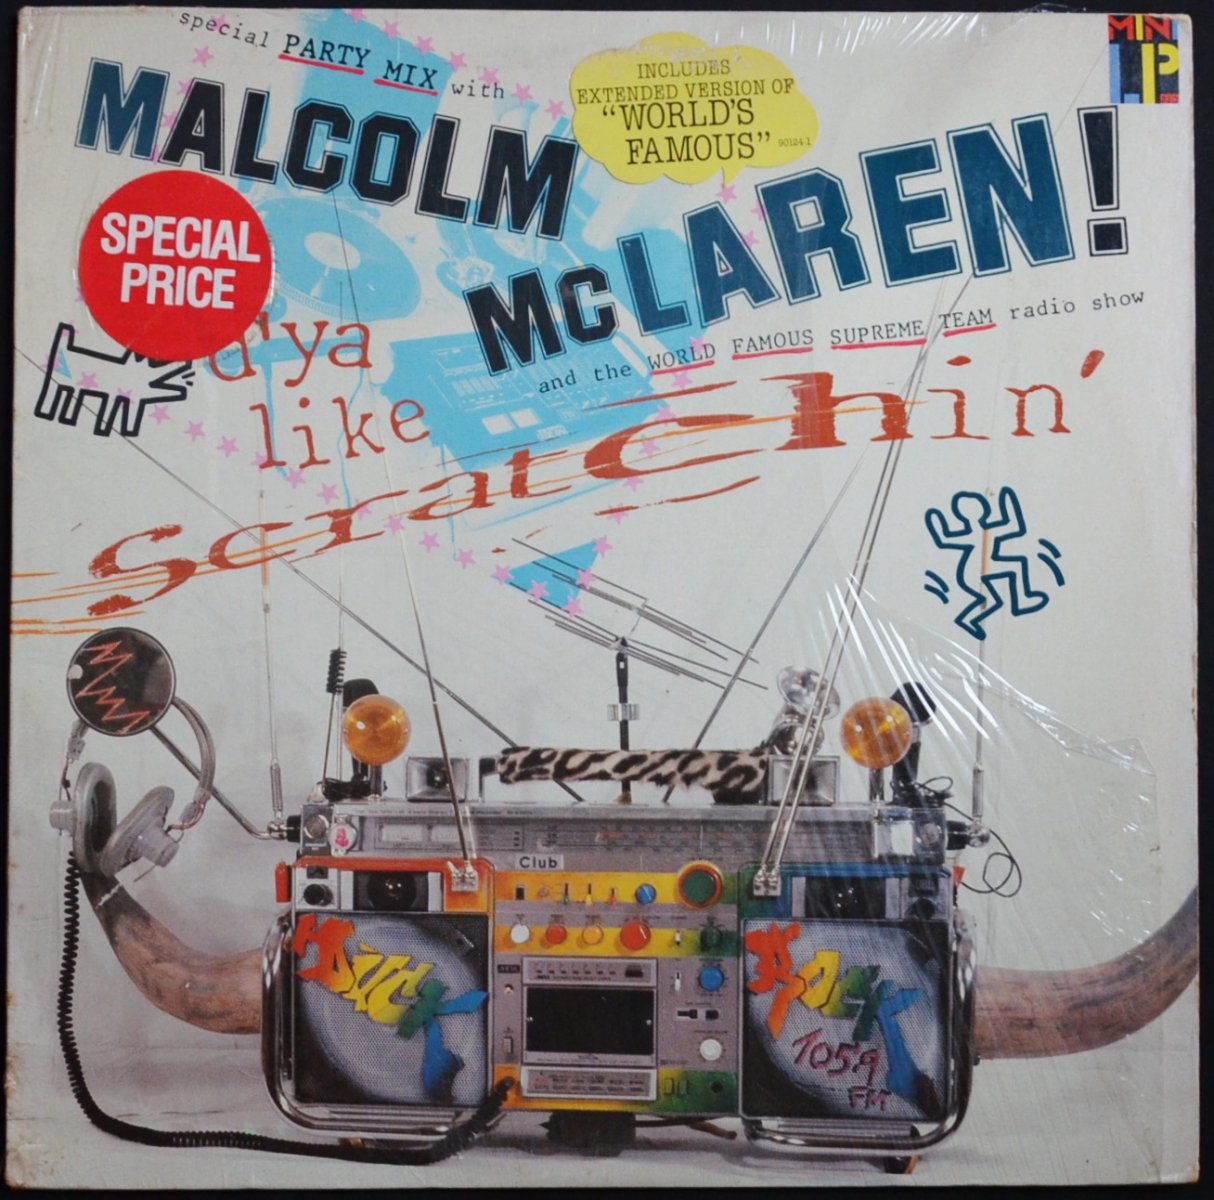 MALCOLM MCLAREN AND THE WORLD FAMOUS SUPREME TEAM RADIO SHOW / D'YA LIKE SCRATCHIN'(1LP)